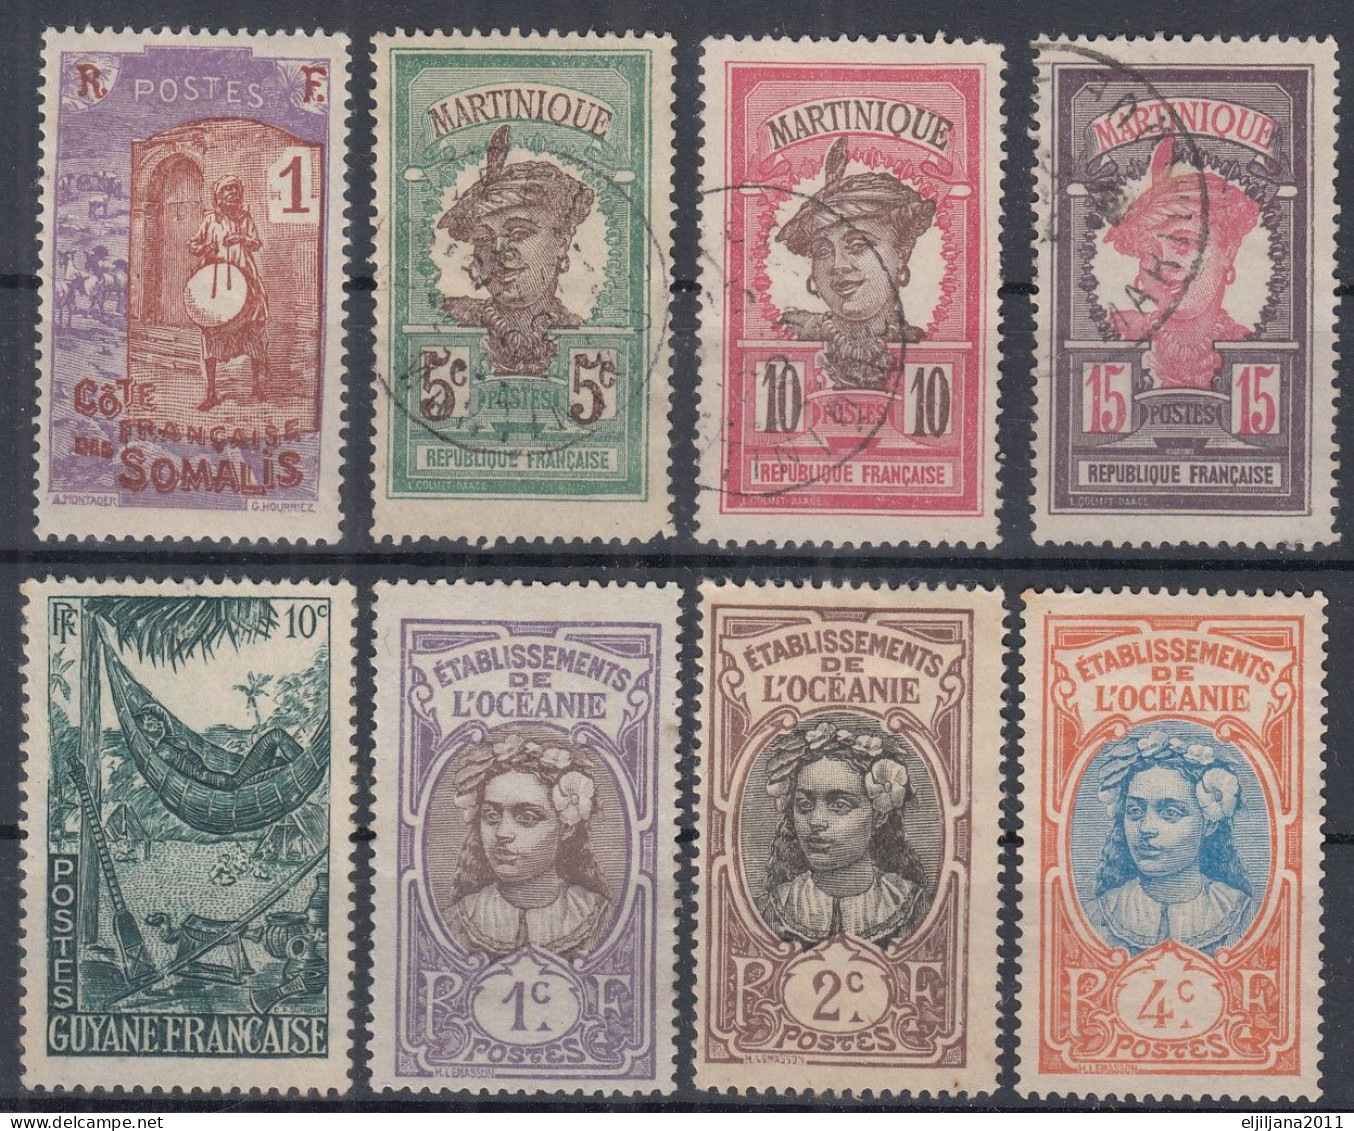 ⁕ French Colony RF ⁕ Martinique, Somalia, Oceania, Guyana ⁕ 8v MH & Used - Colecciones